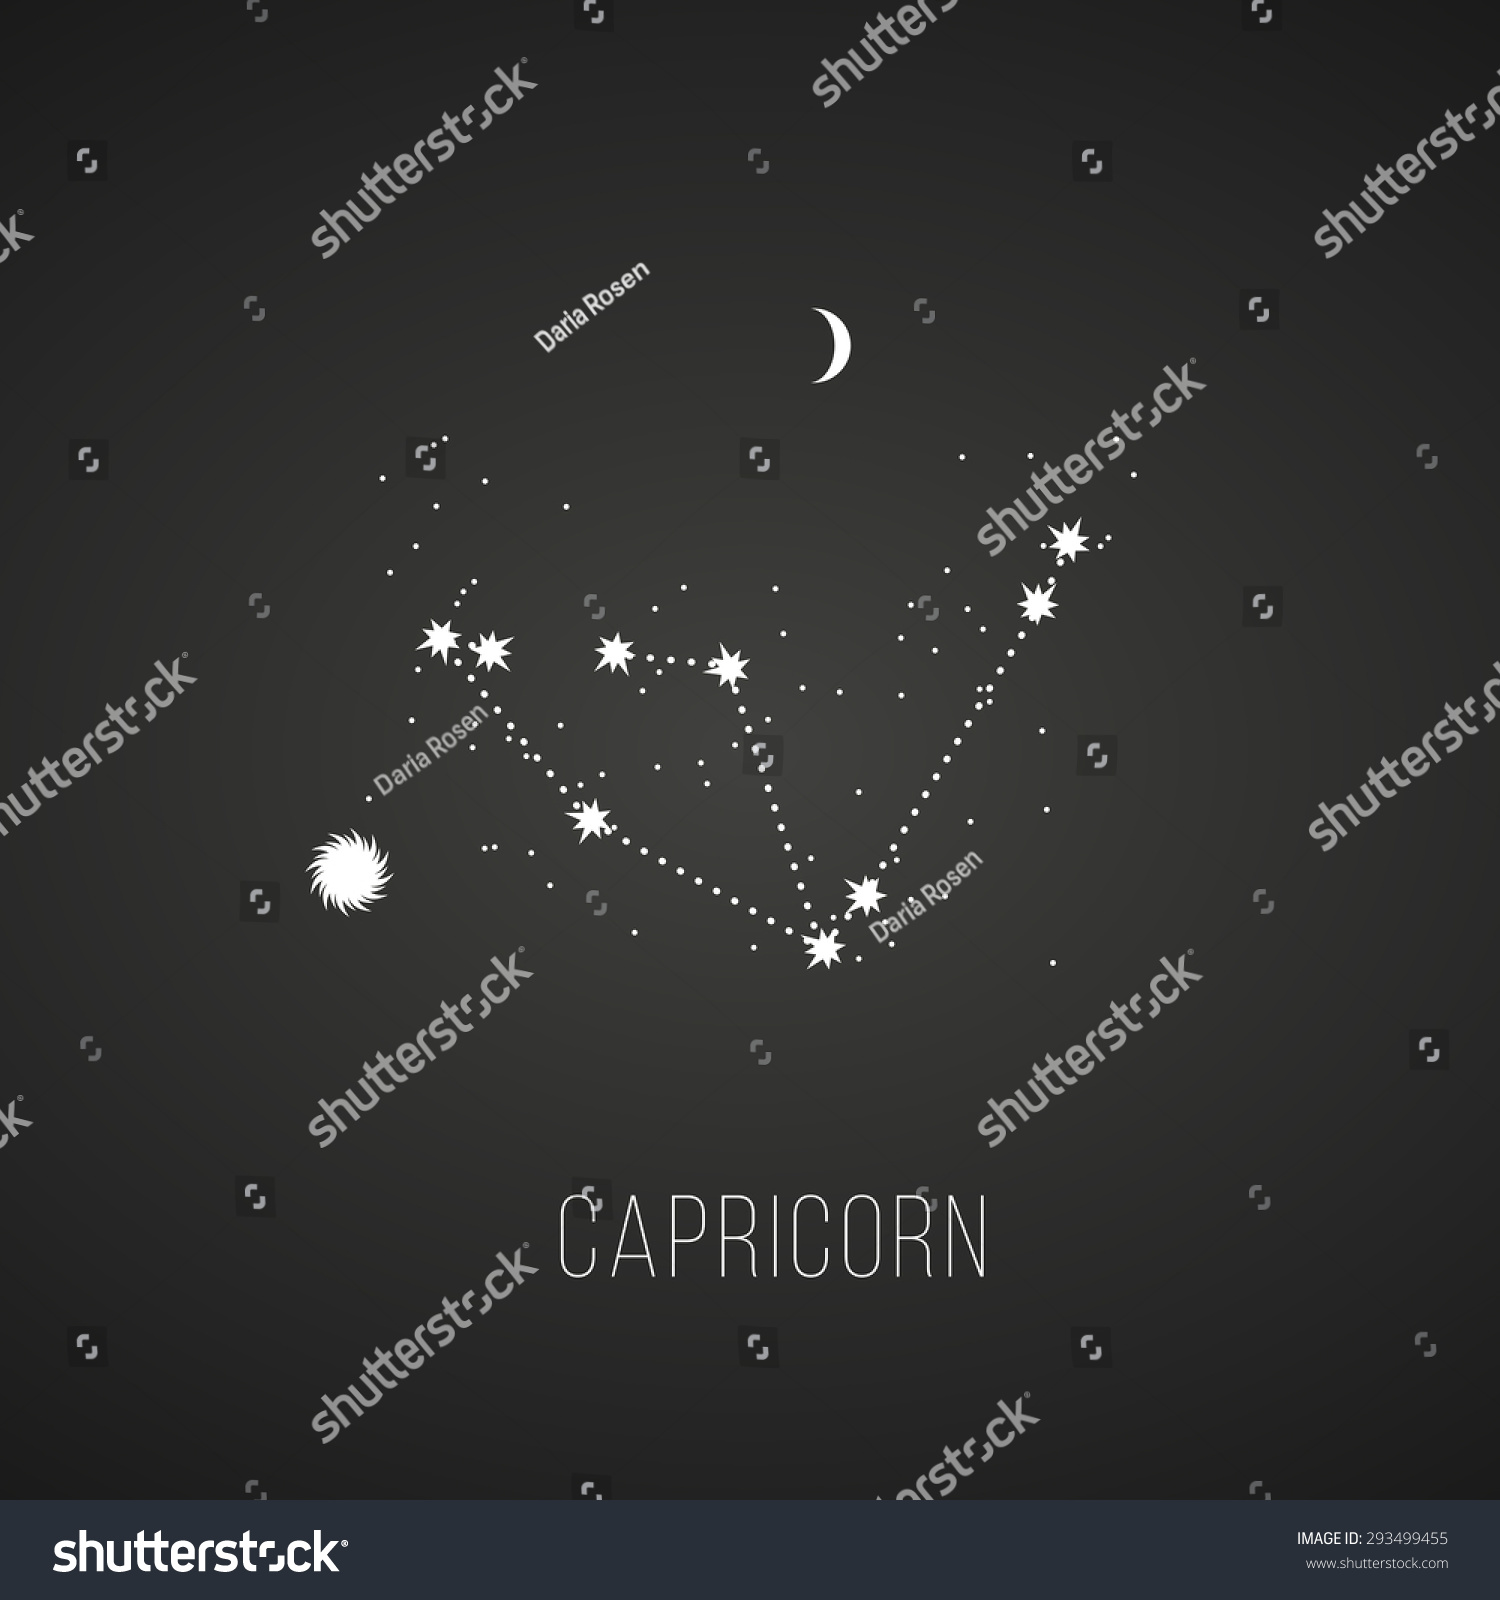 Astrology Sign Capricorn On Chalkboard Background. Zodiac Constellation ...